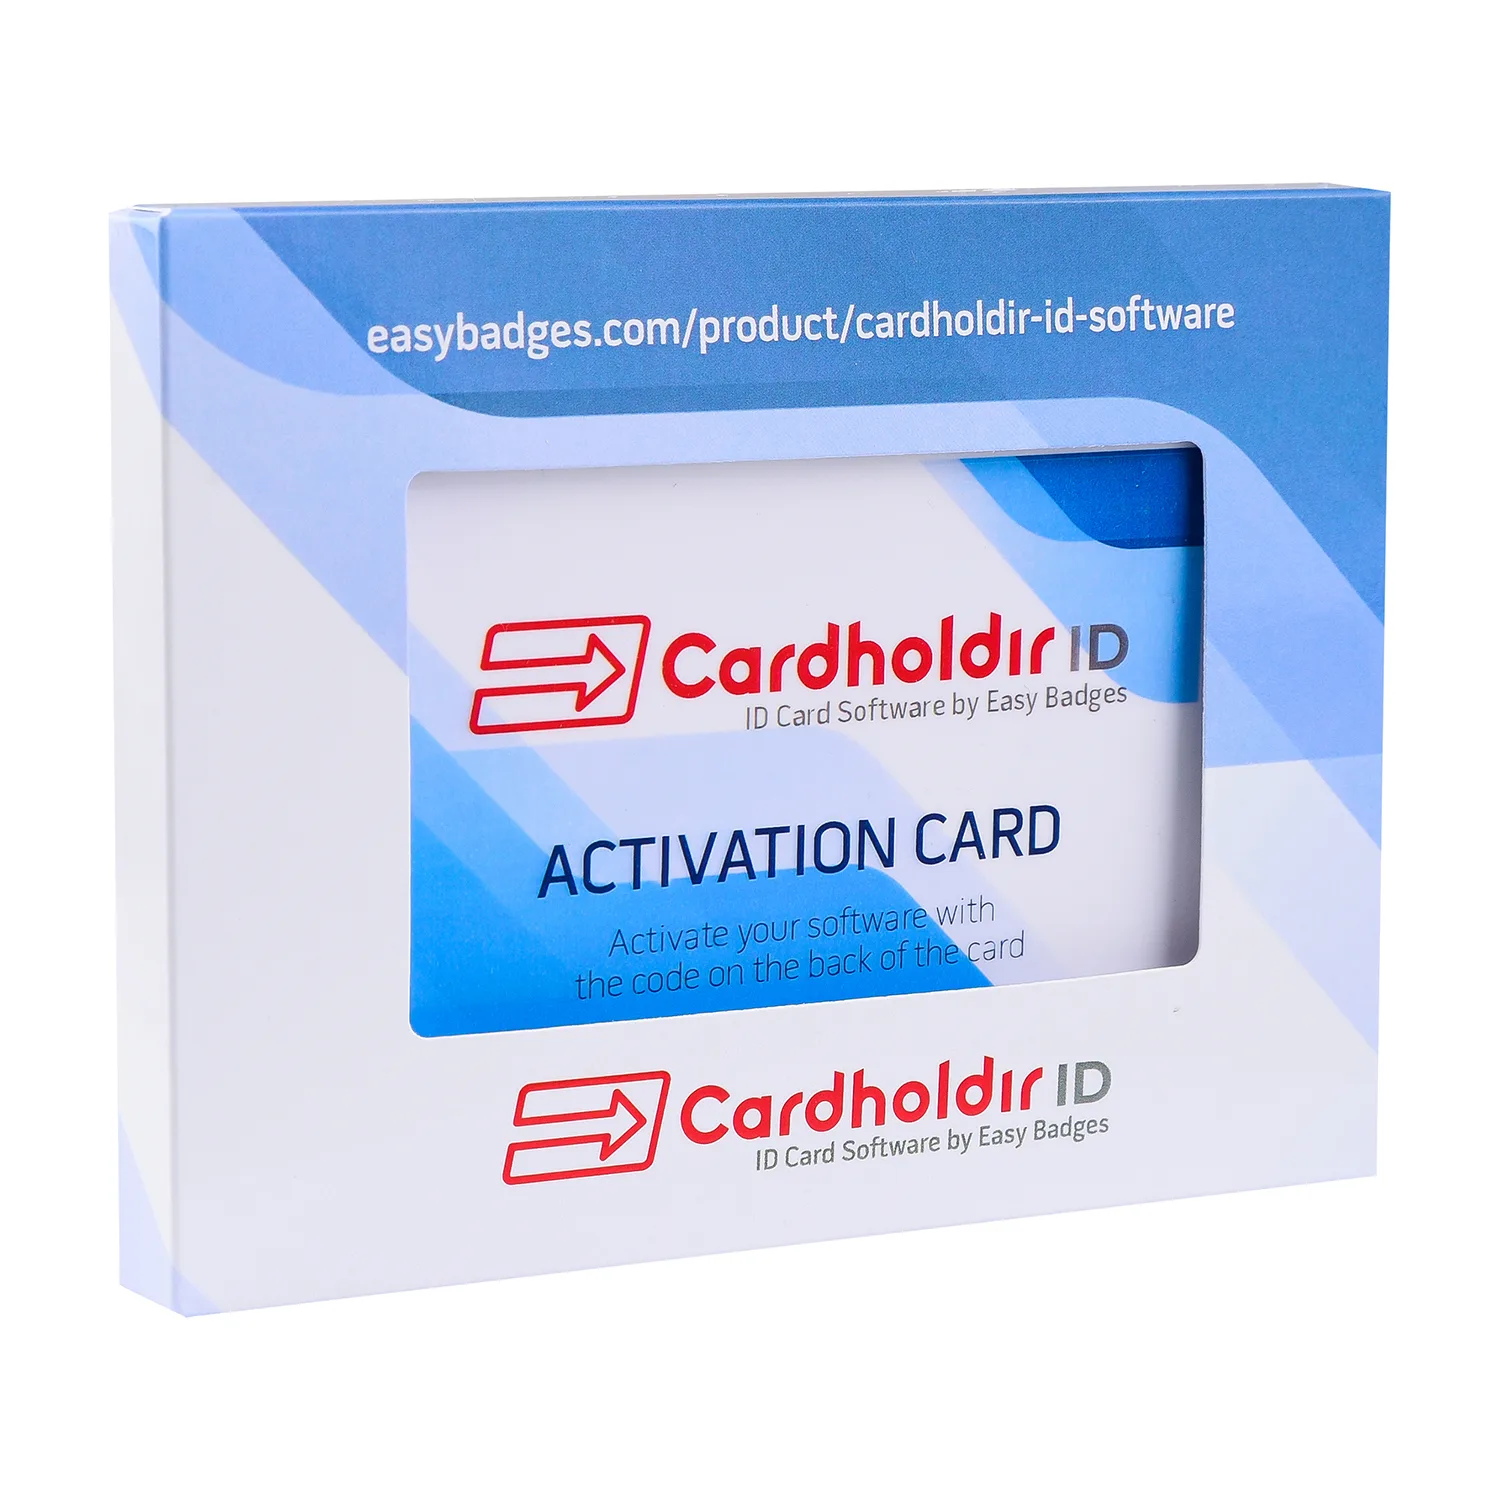 Cardholdir ID Card Software